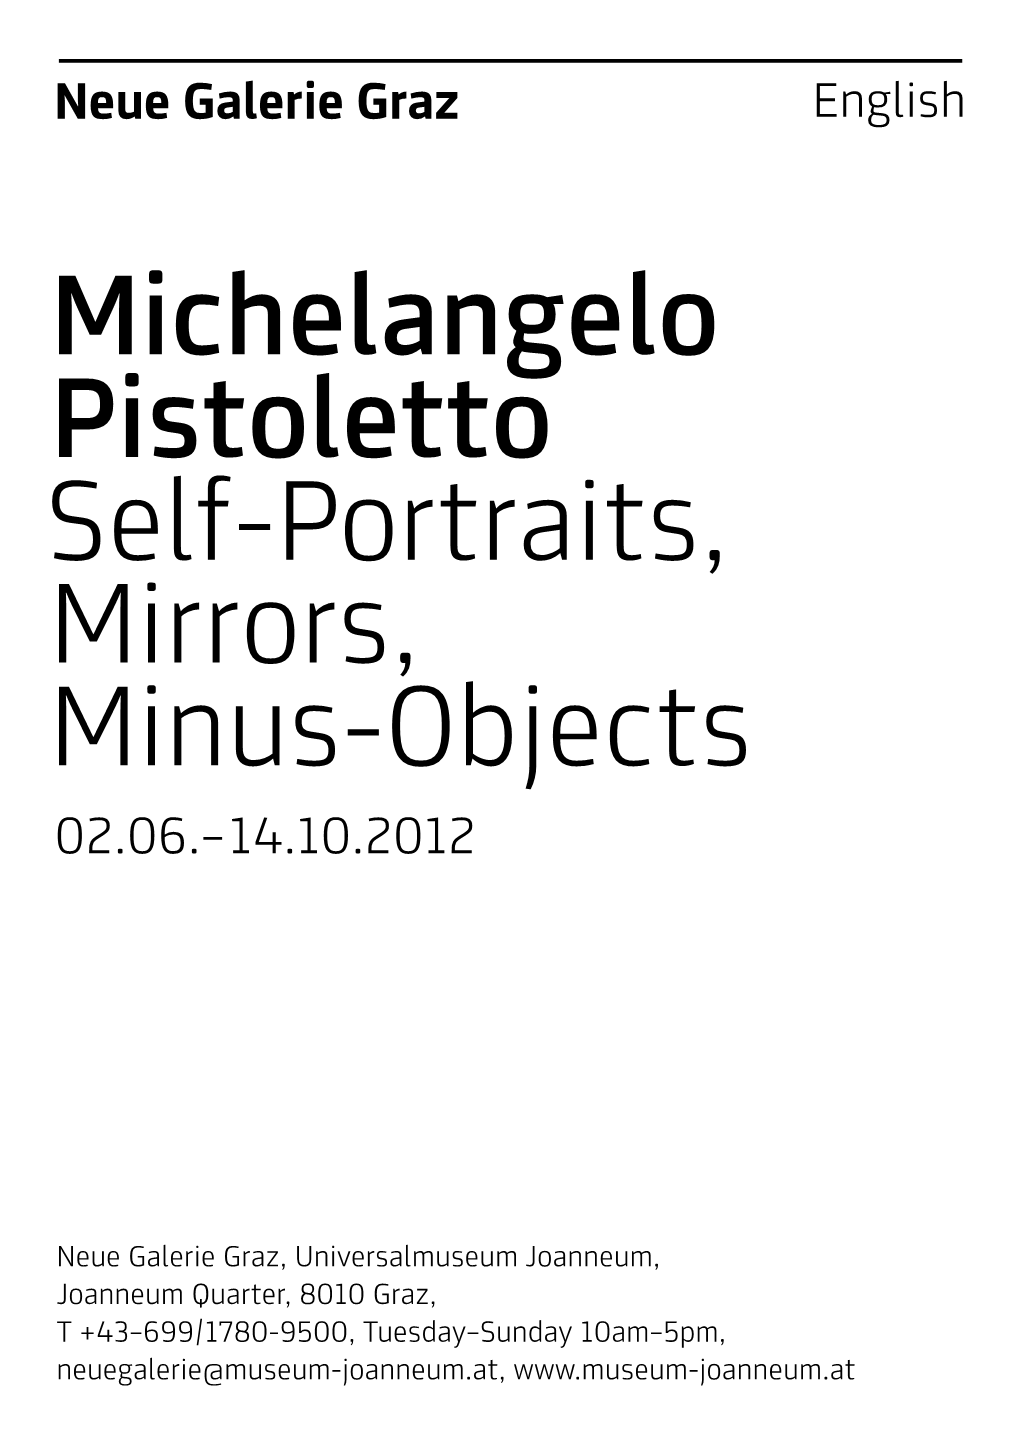 Michelangelo Pistoletto Self-Portraits, Mirrors, Minus-Objects 02.06.– 14.10.2012